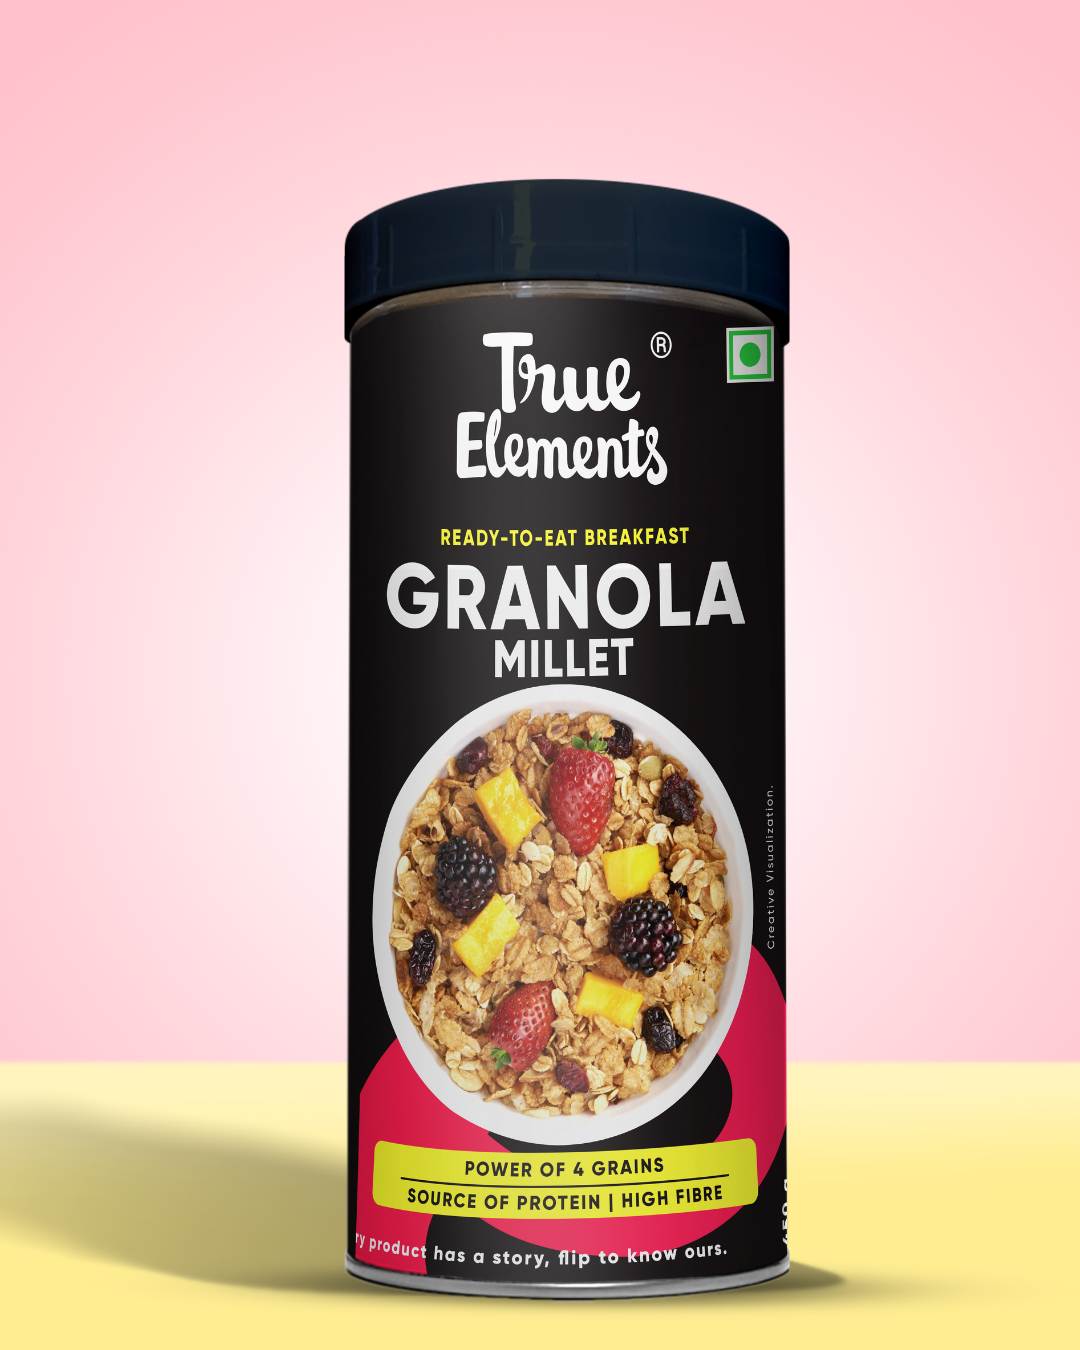 True Elements Millet granola 450gm power of 4 grains